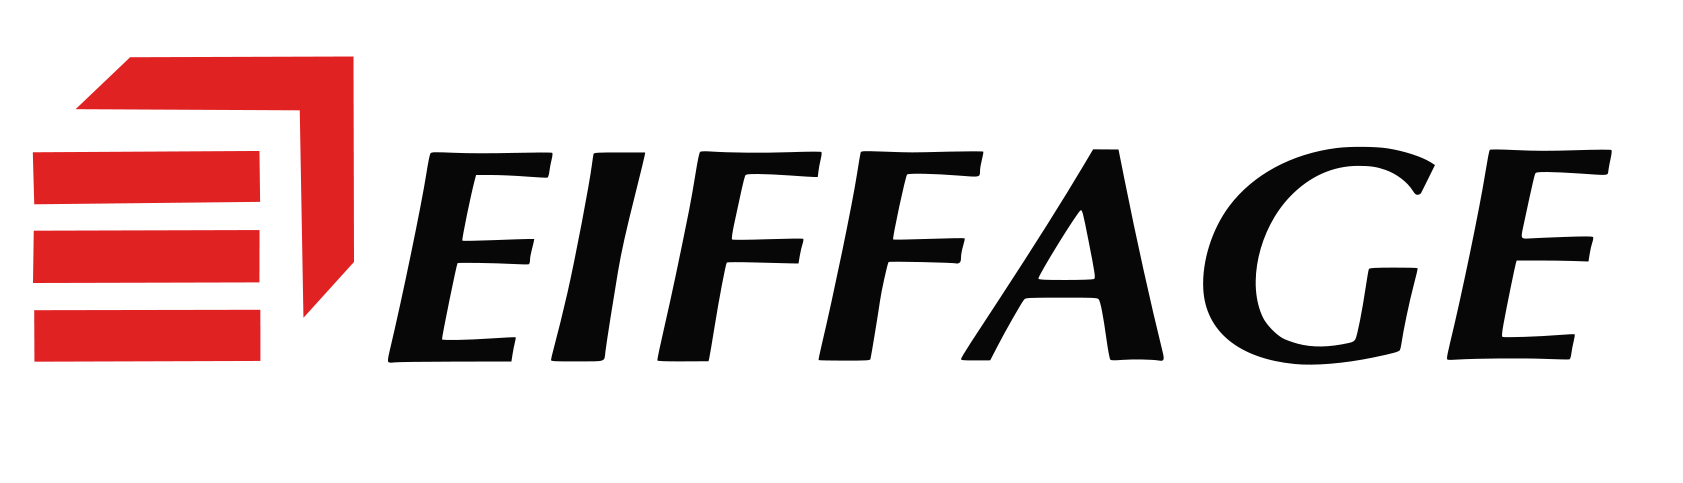 Logo Eiffage, mécène fondateur de la Fondation INSA Strasbourg